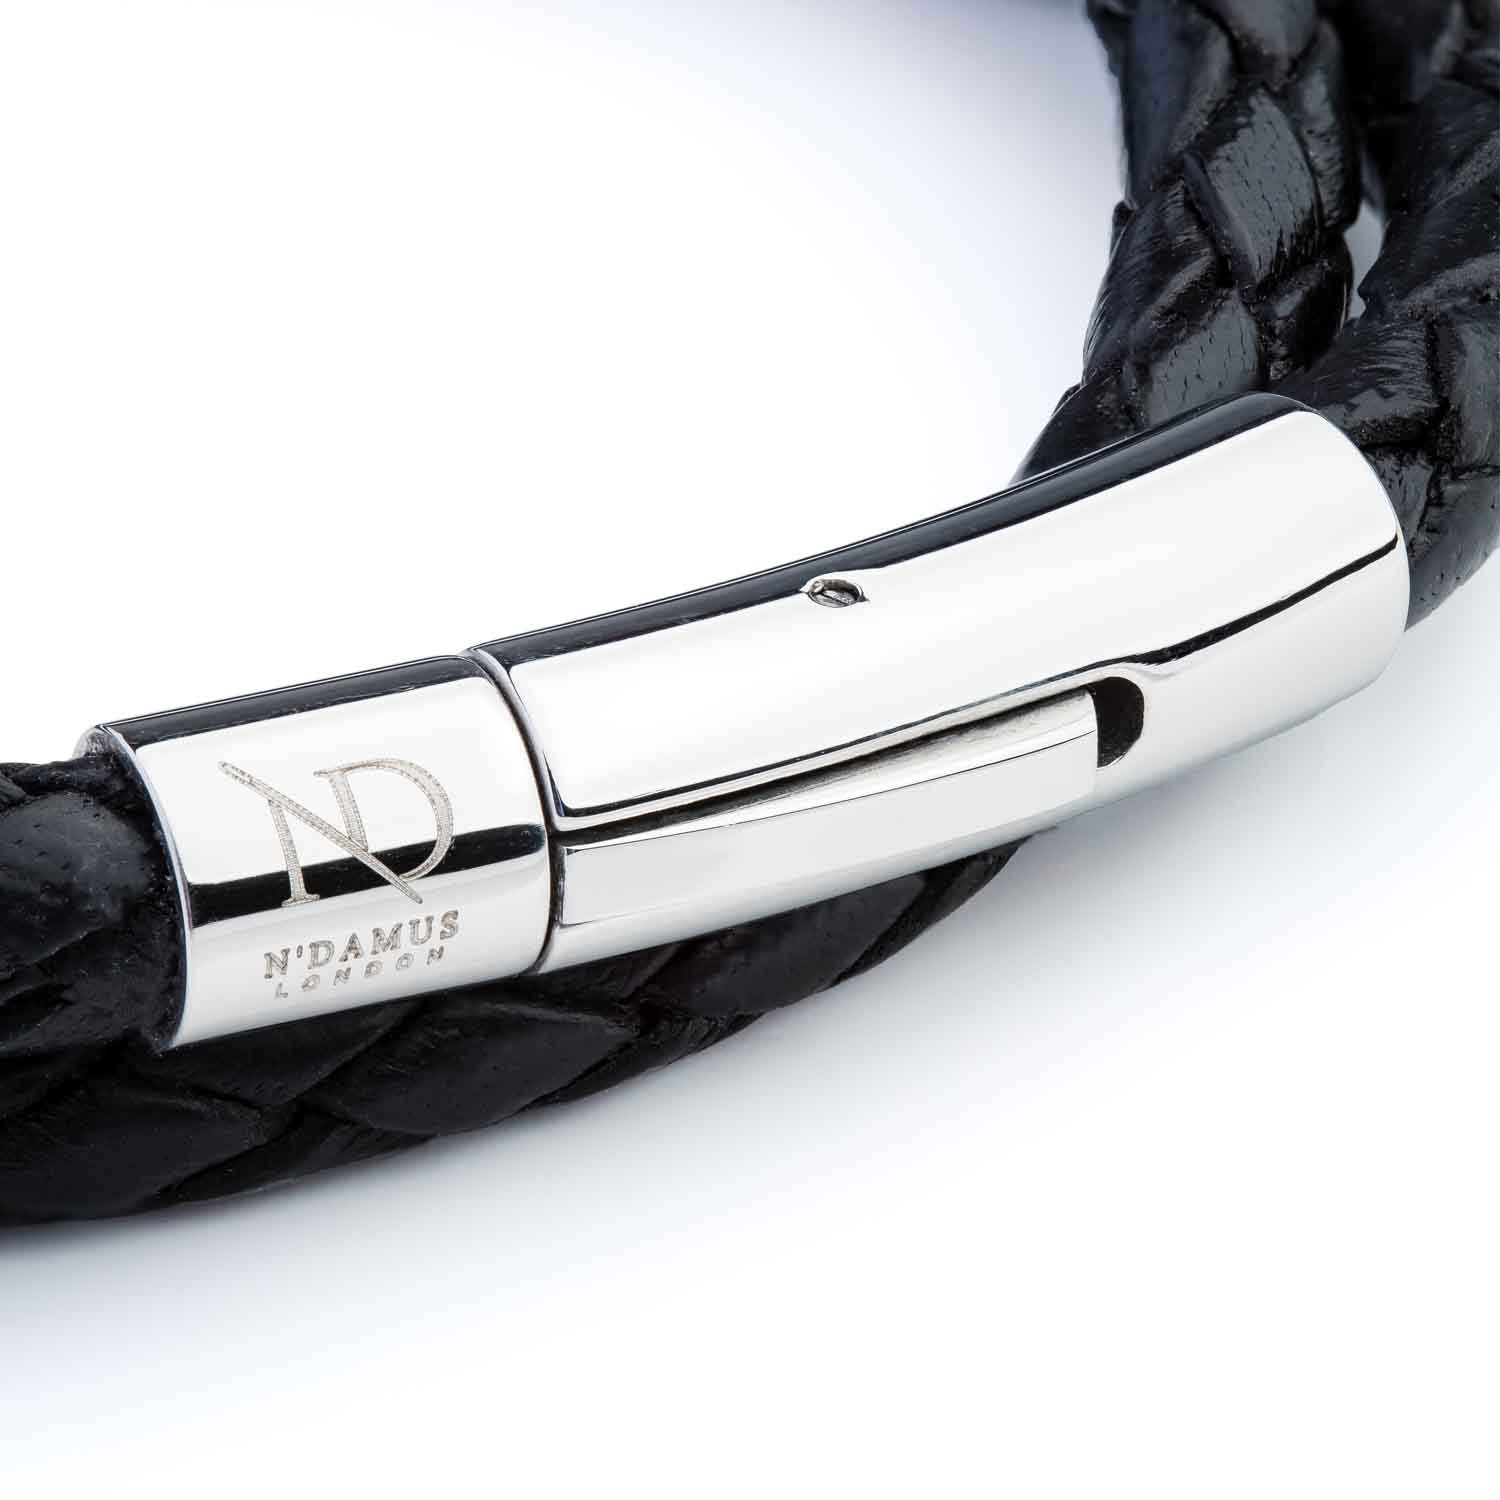 Double Black Leather Bracelet with 14K Clasp